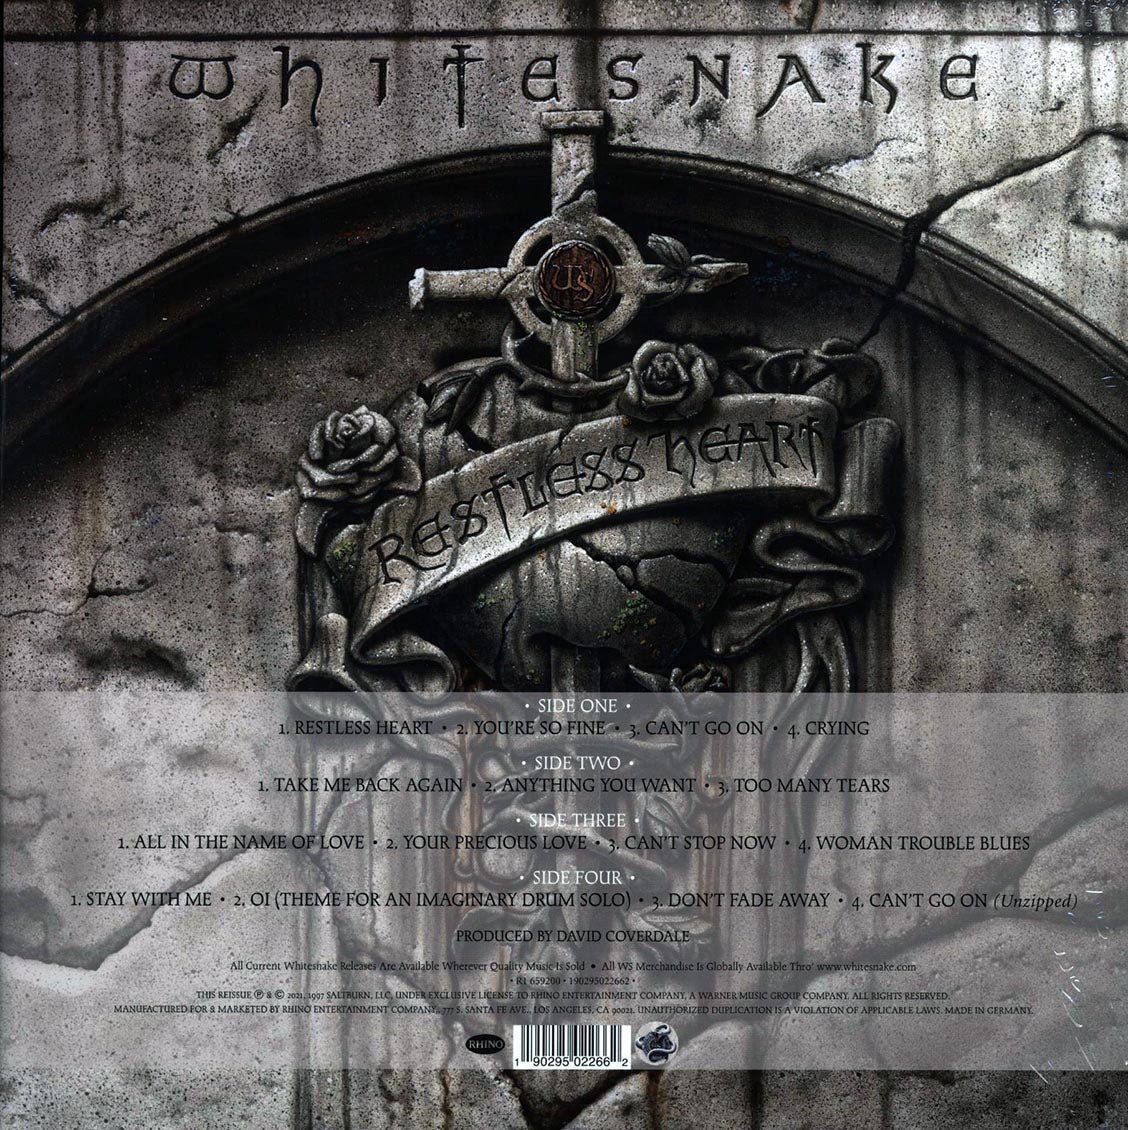 Whitesnake - Restless Heart [2021 Remastered 180G Silver Limited] [New Double Vinyl Record LP]